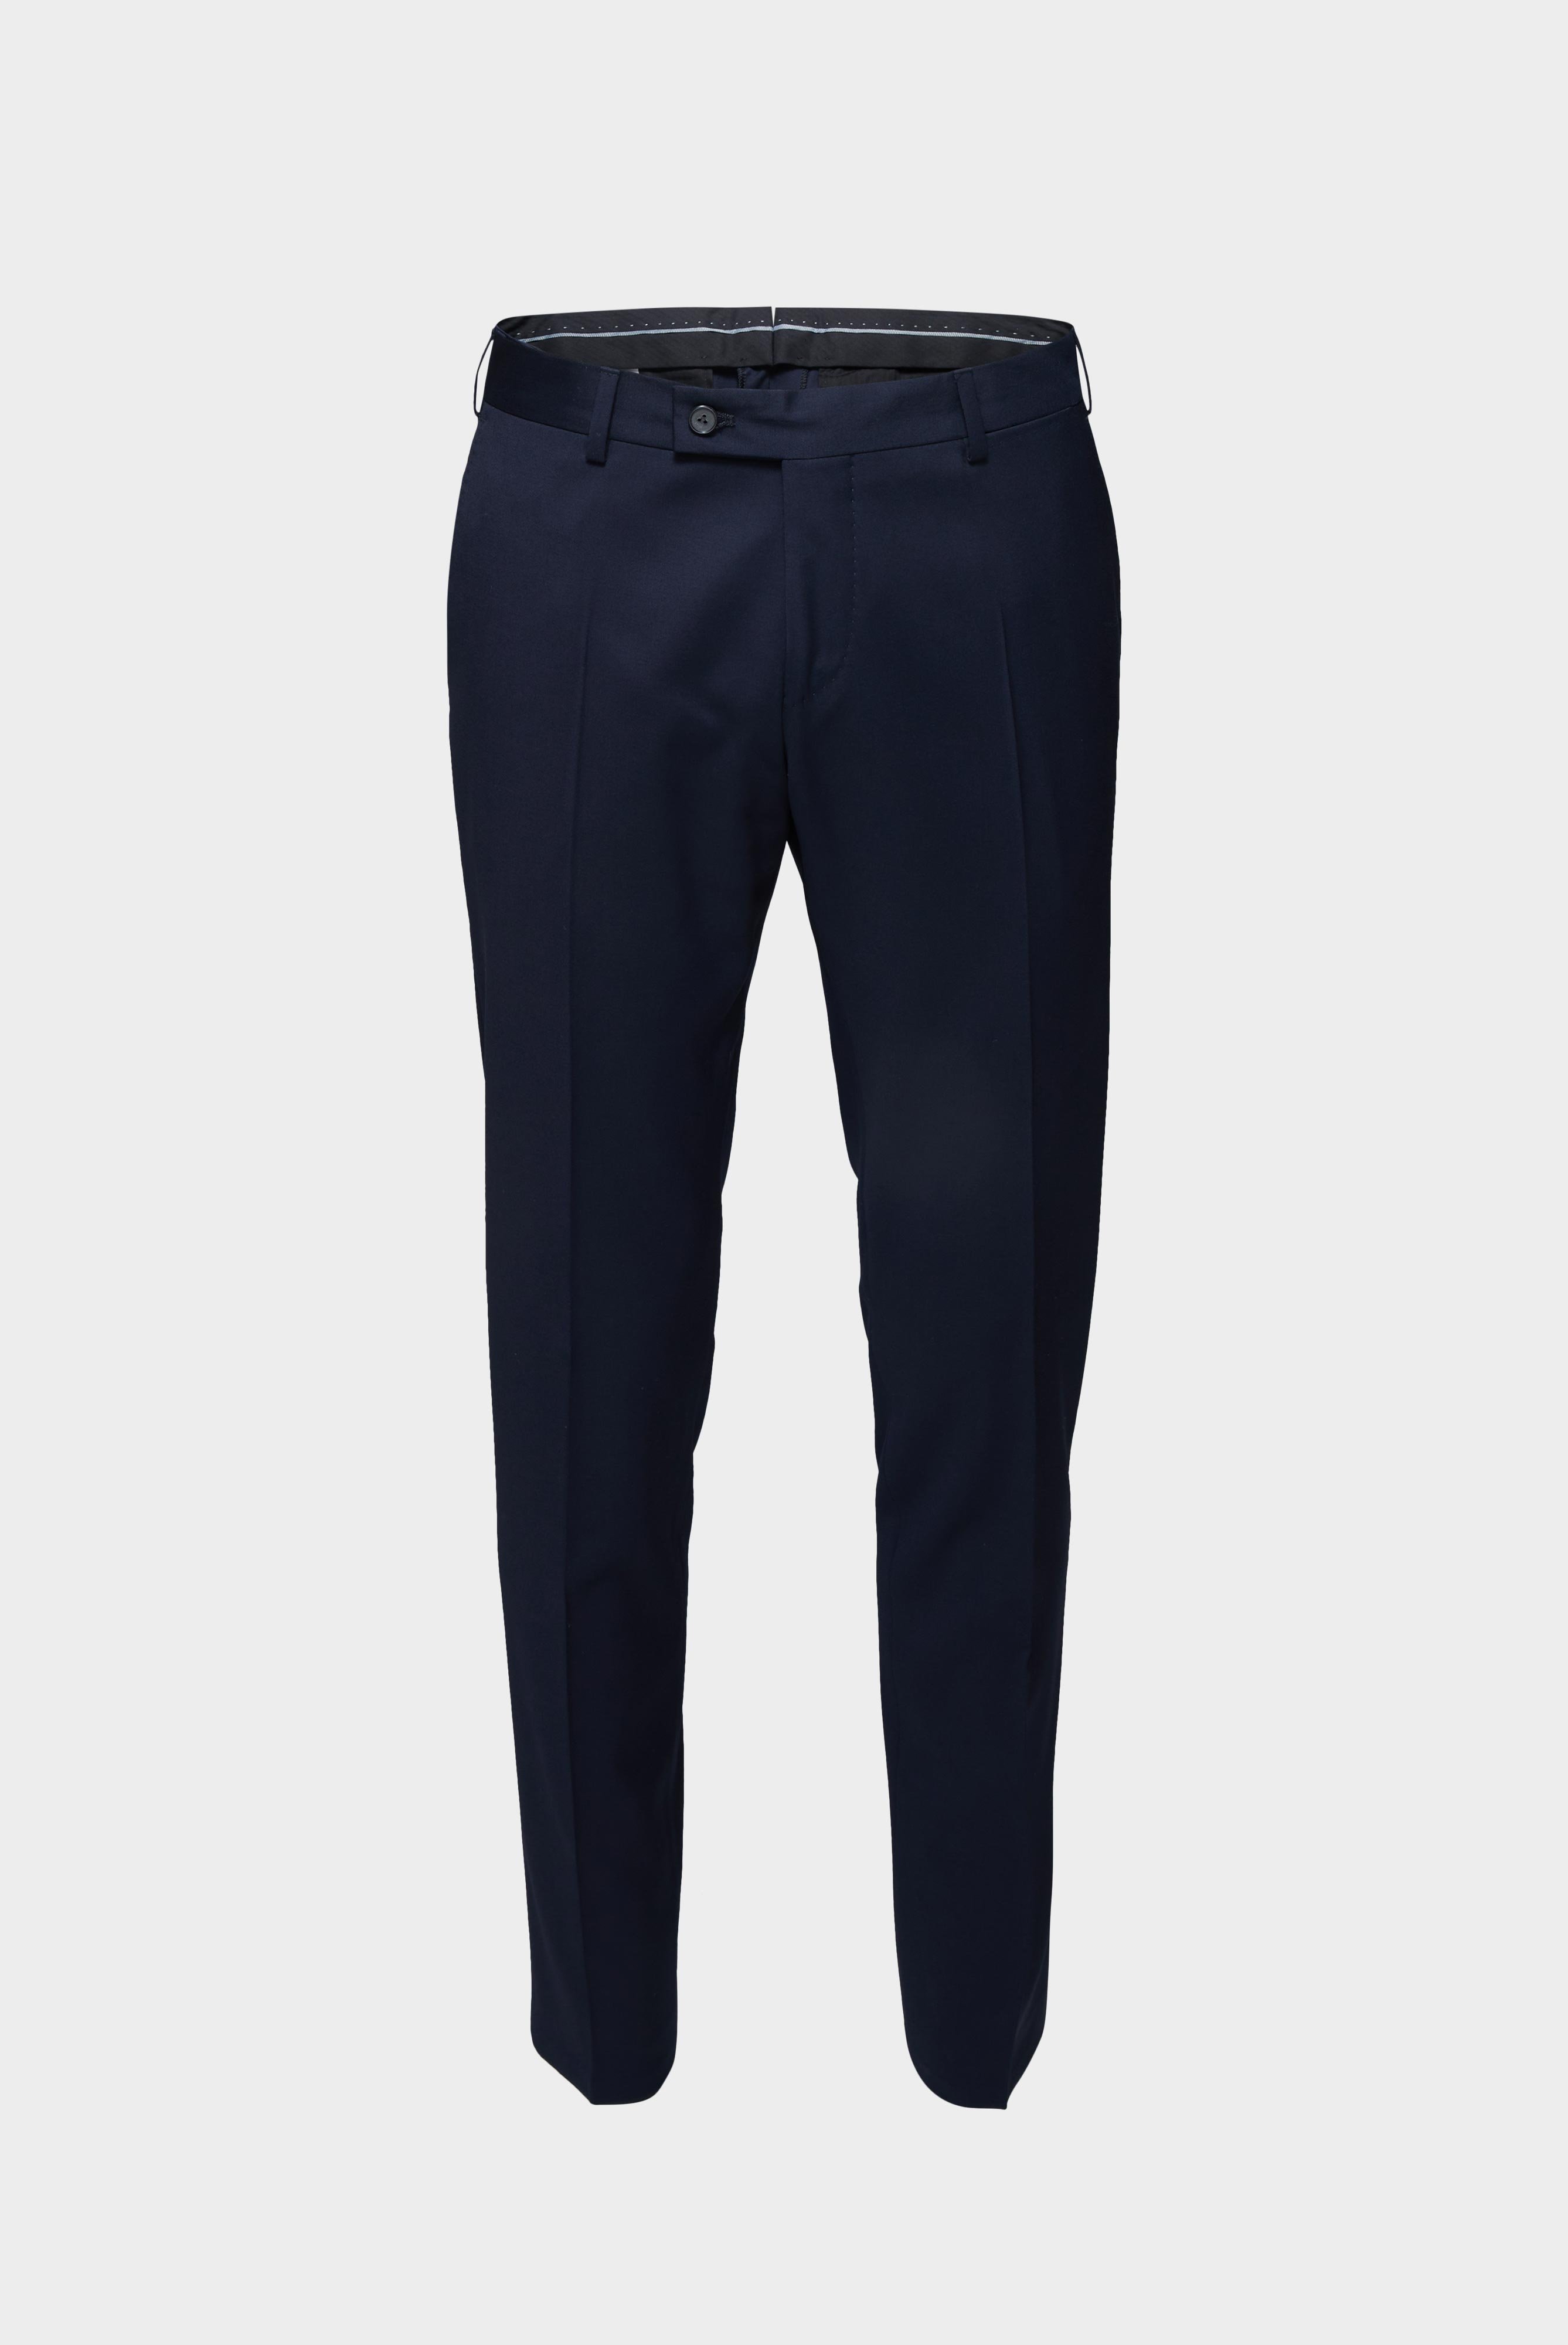 Jeans & Hosen+Hose aus Wolle Slim Fit+20.7880.16.H01010.780.44